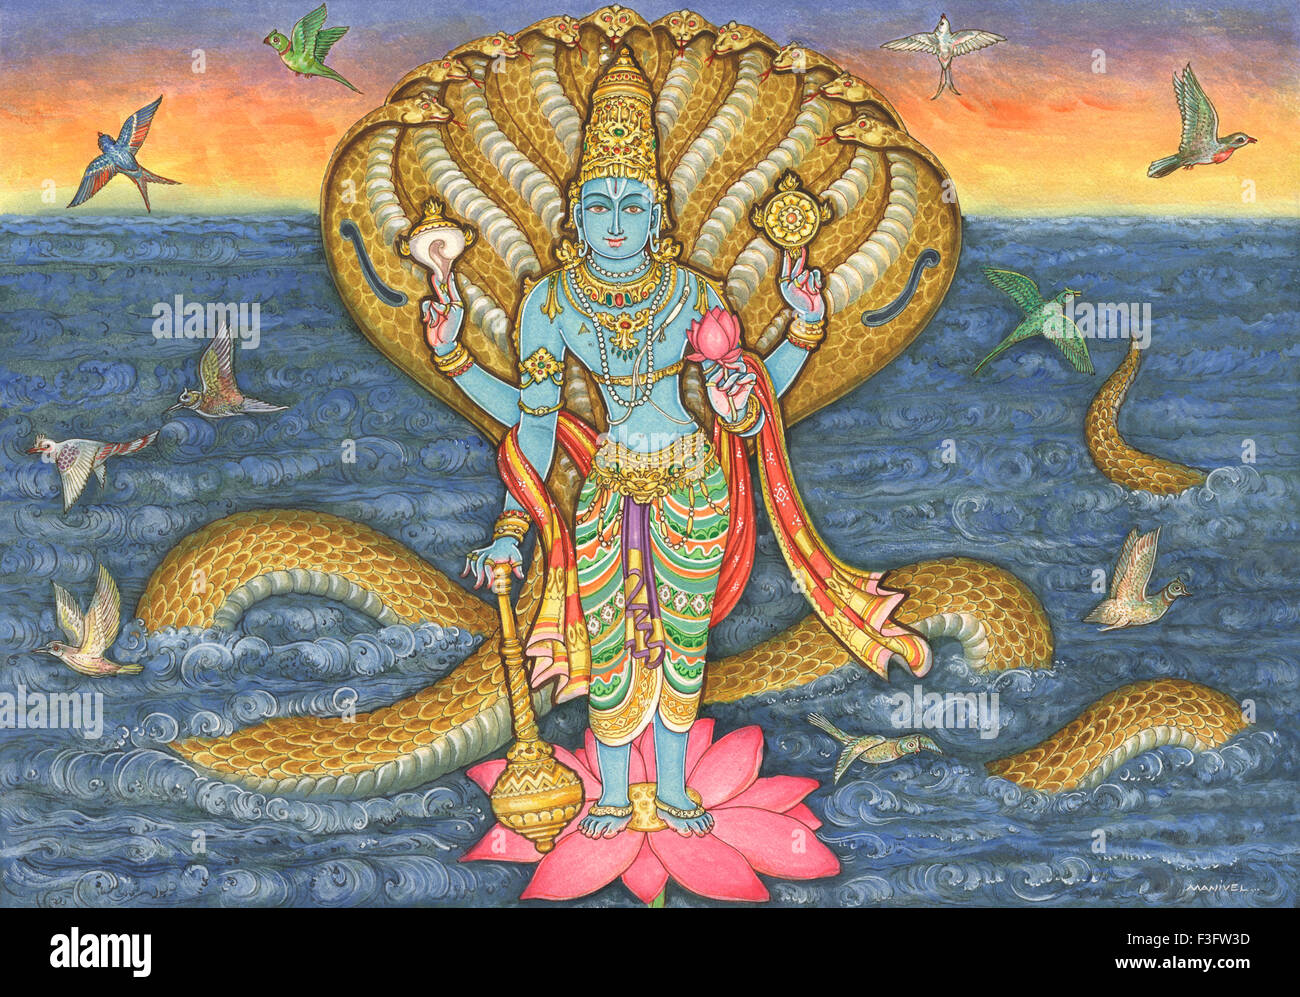 painting of hindu god vishnu standing on lotus flower and protected by hydra headed snake in ocean Stock Photo